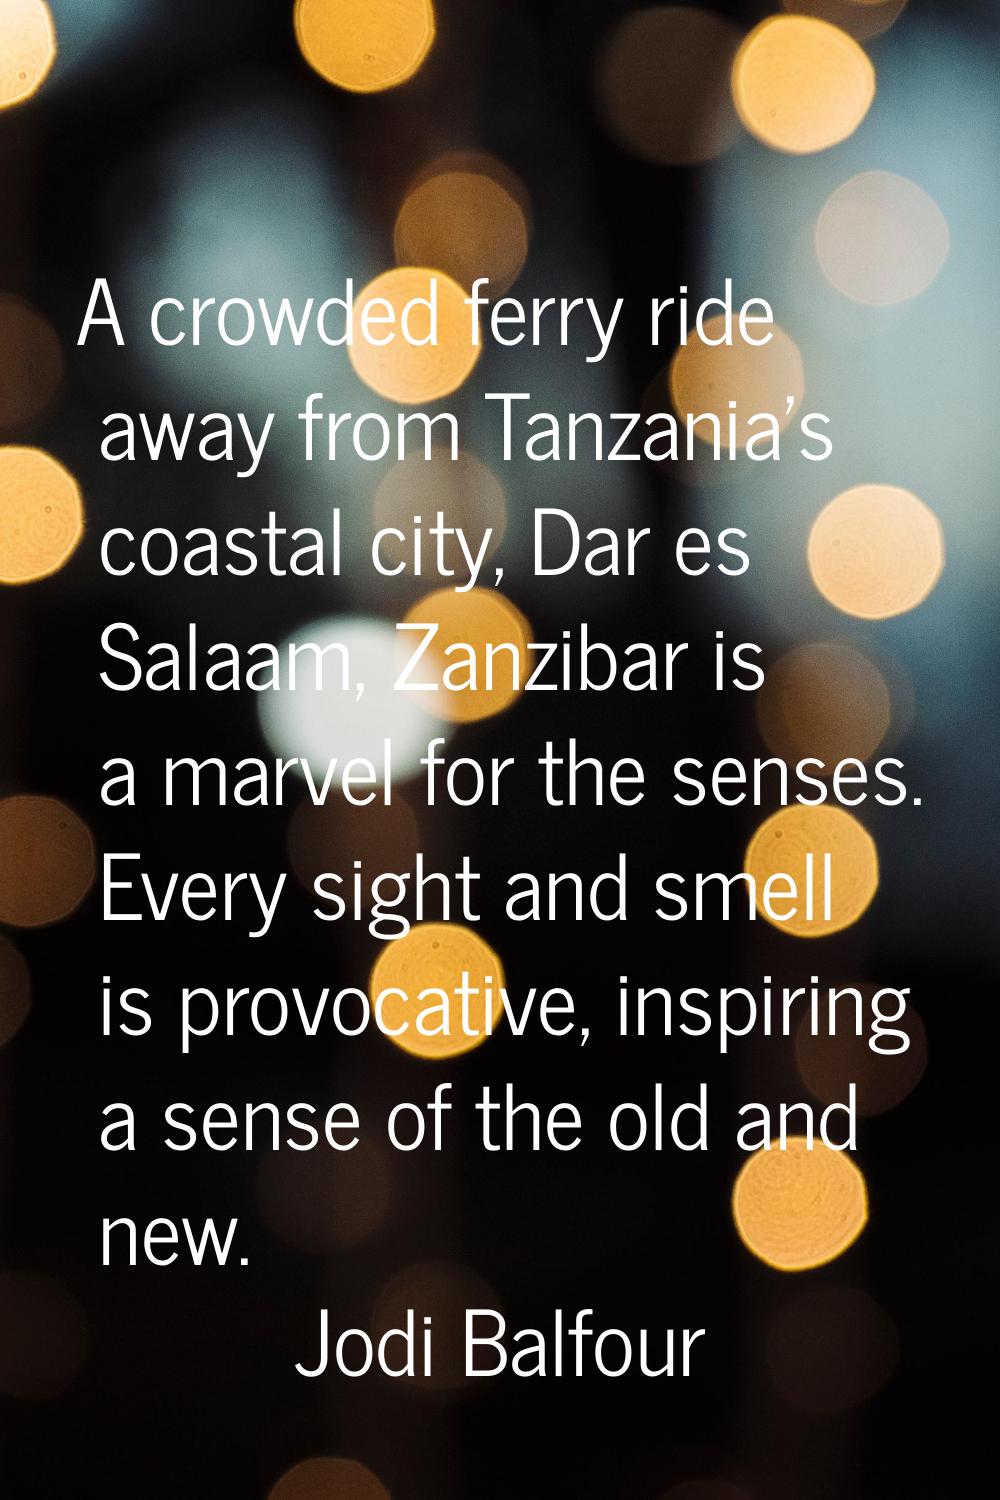 A crowded ferry ride away from Tanzania's coastal city, Dar es Salaam, Zanzibar is a marvel for the